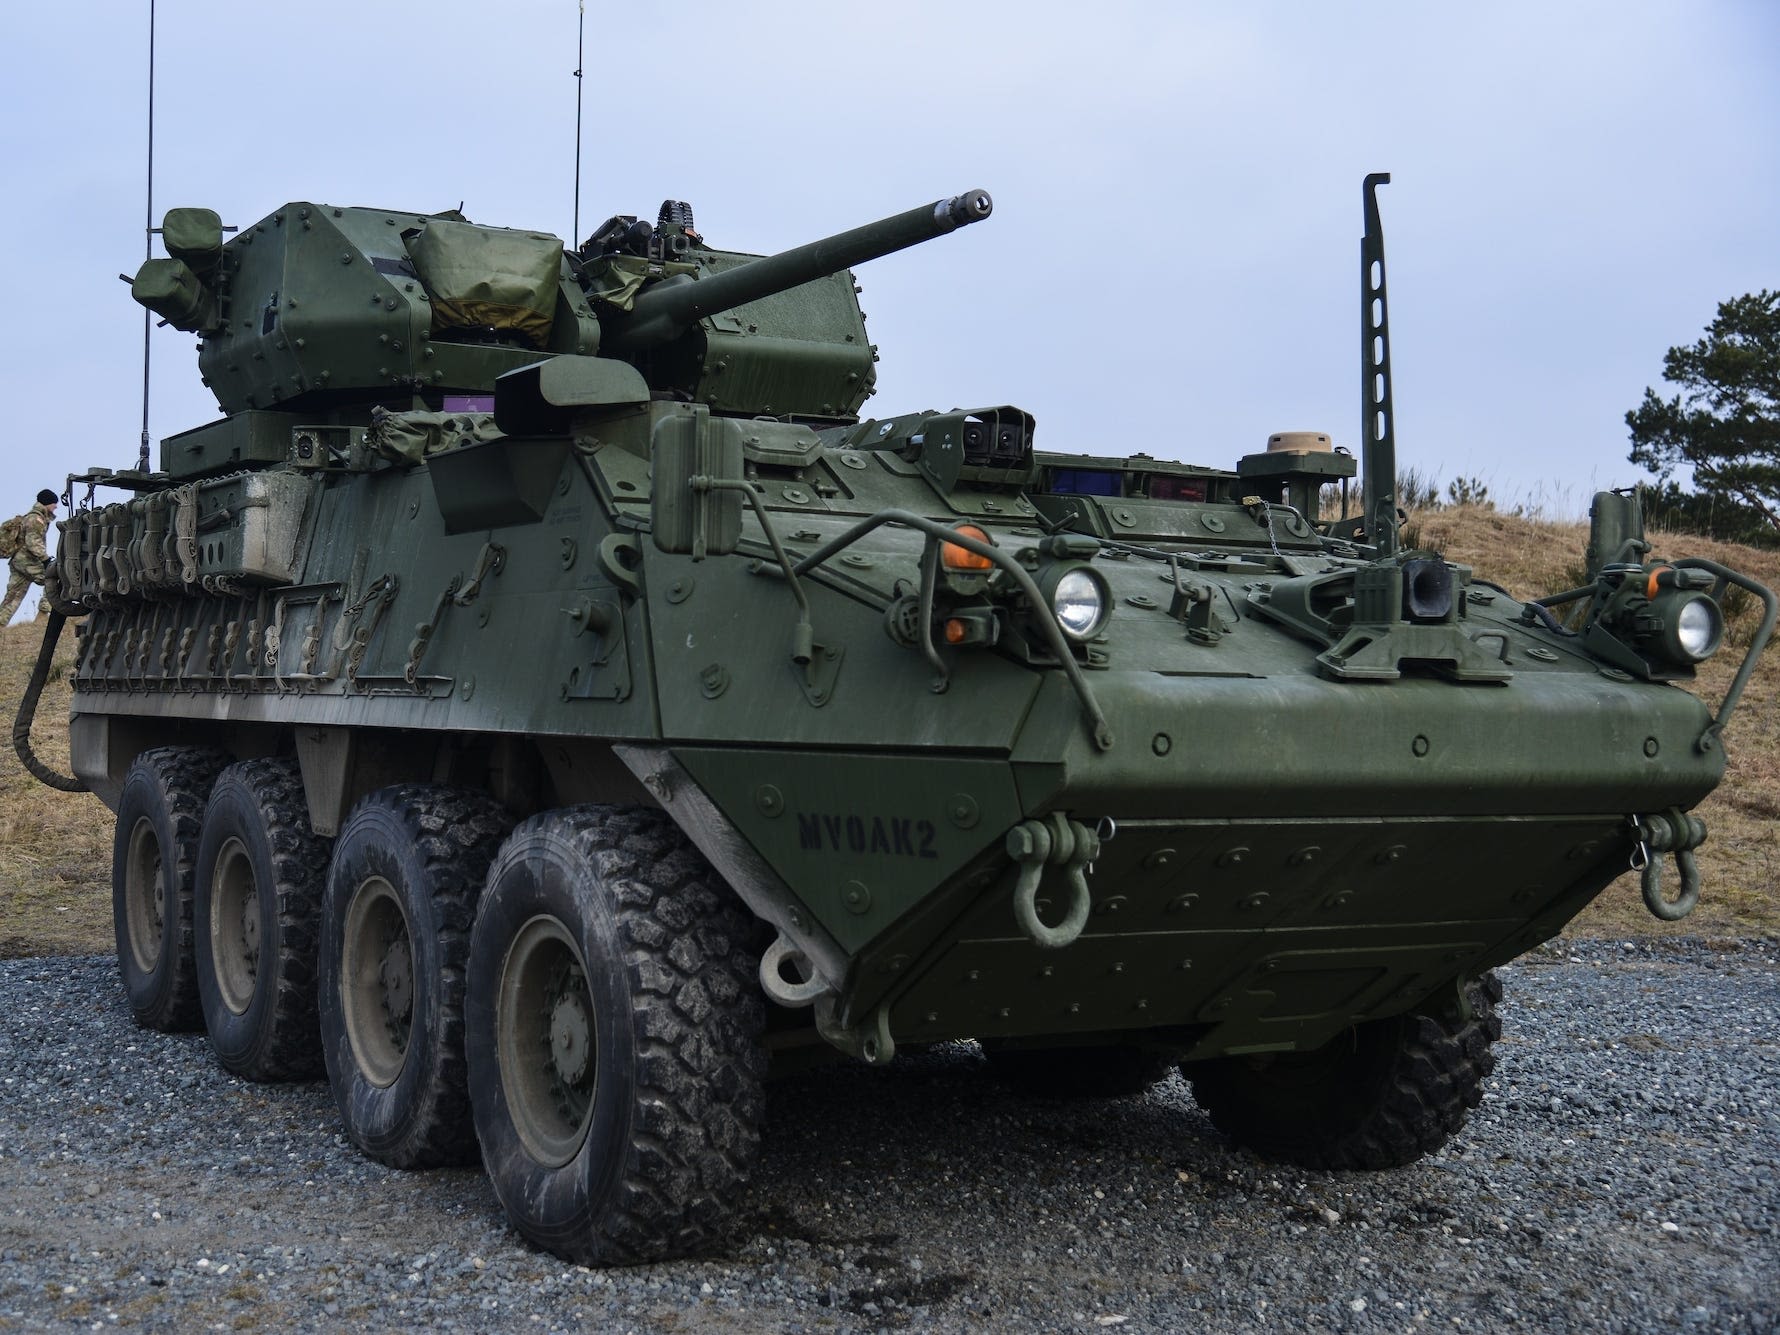 US Stryker armored fighting vehicles help Ukraine recapture lost territory in Kharkiv region, report says